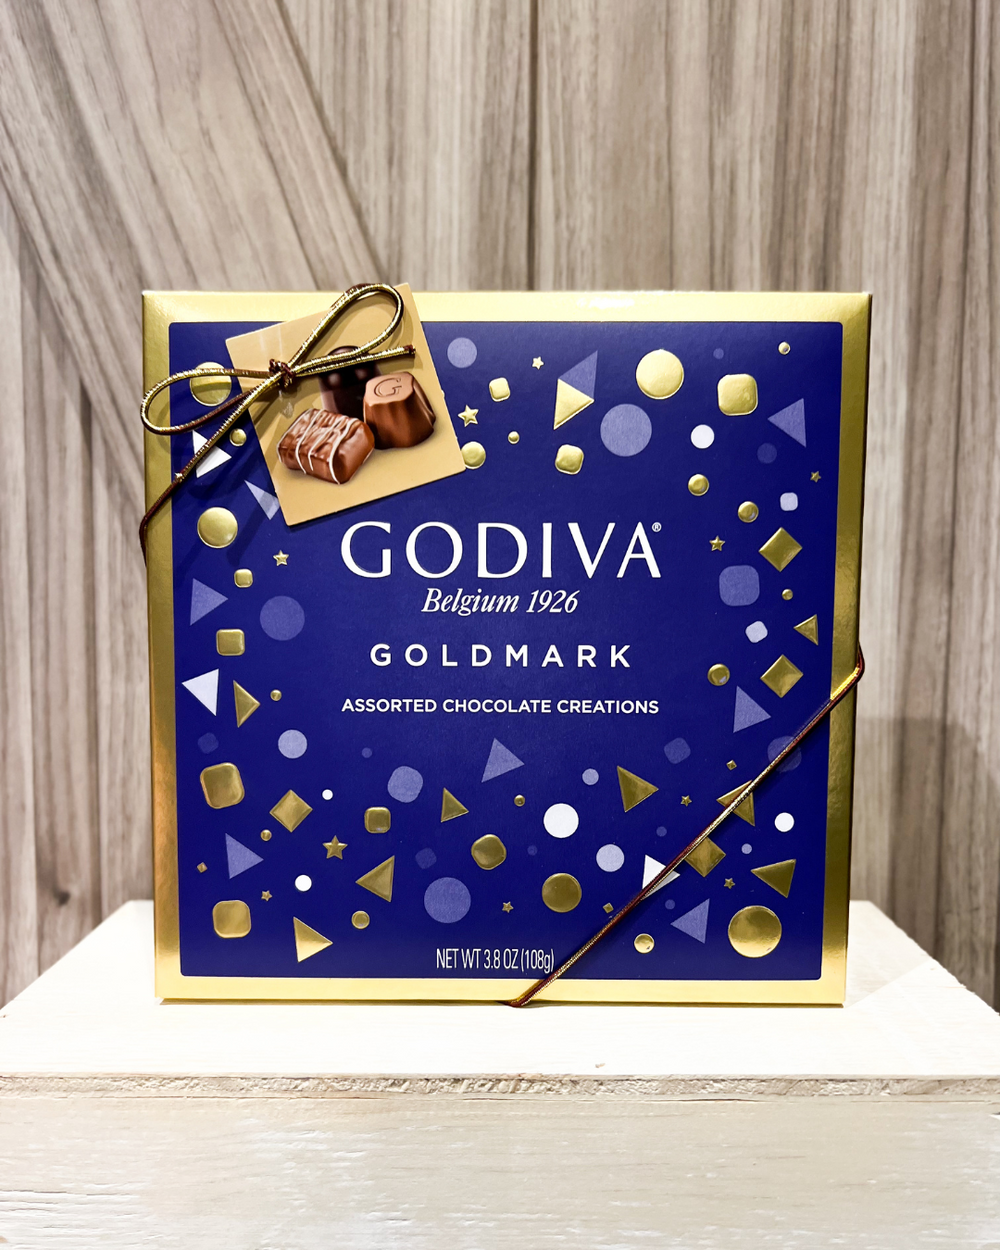 Godiva Goldmark Assorted Chocolate Creations